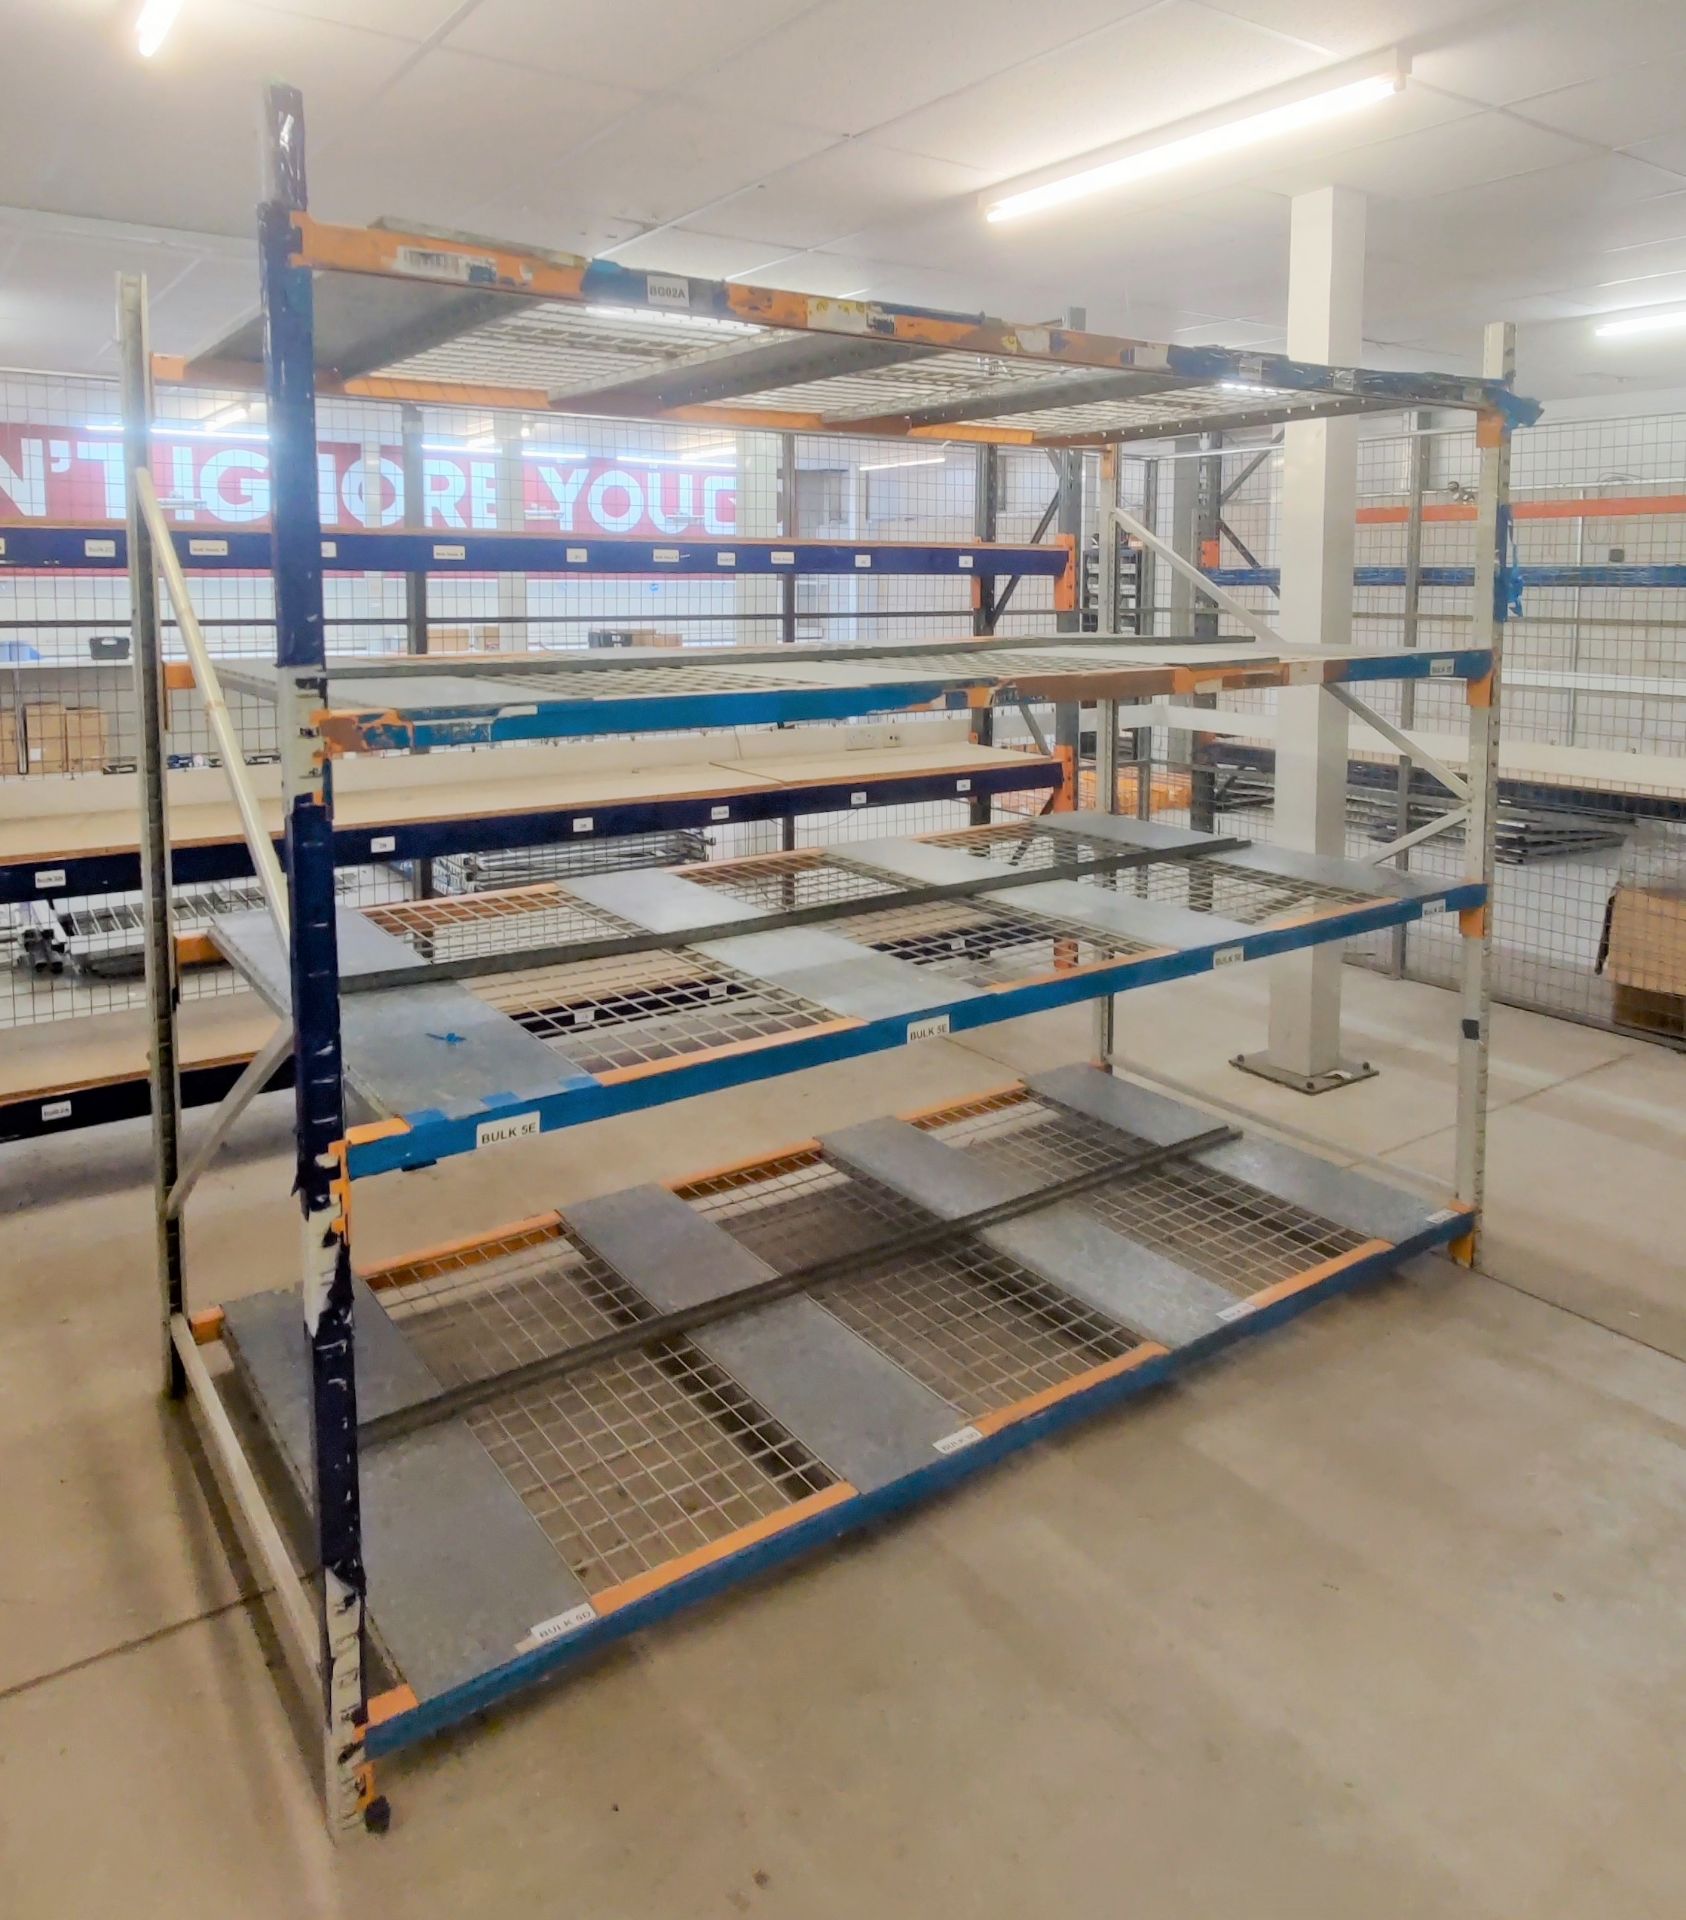 4 x Bays of Heavy Duty Warehouse Racking / Shelving With Metal Shelf Panels